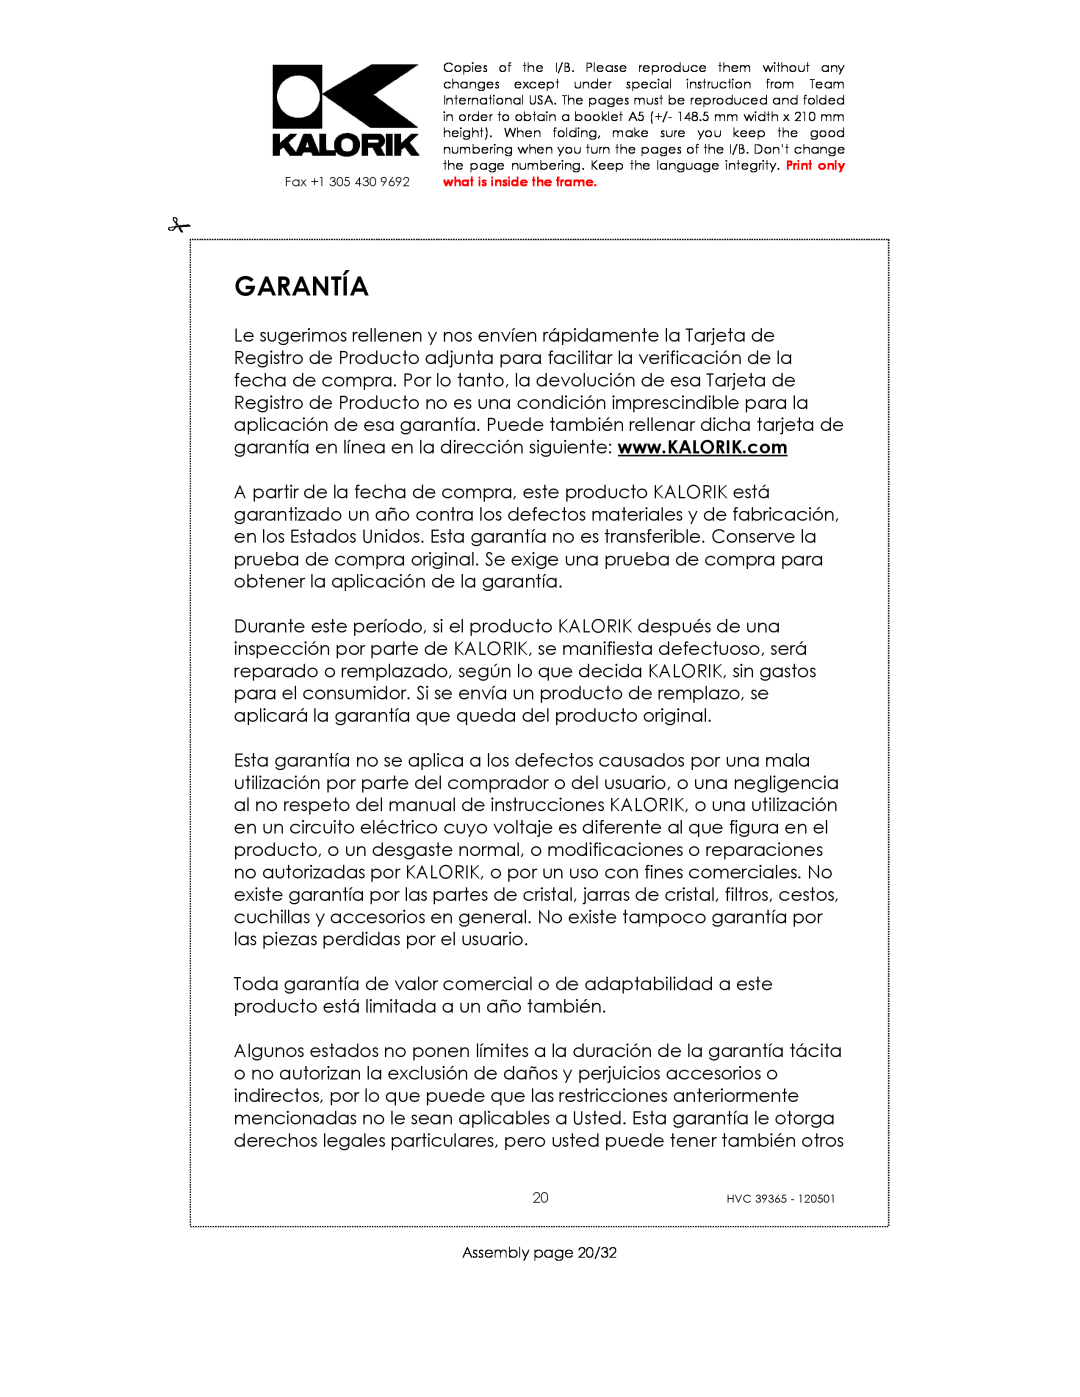 Kalorik HVC 39365 manual Garantía, Assembly page 20/32 